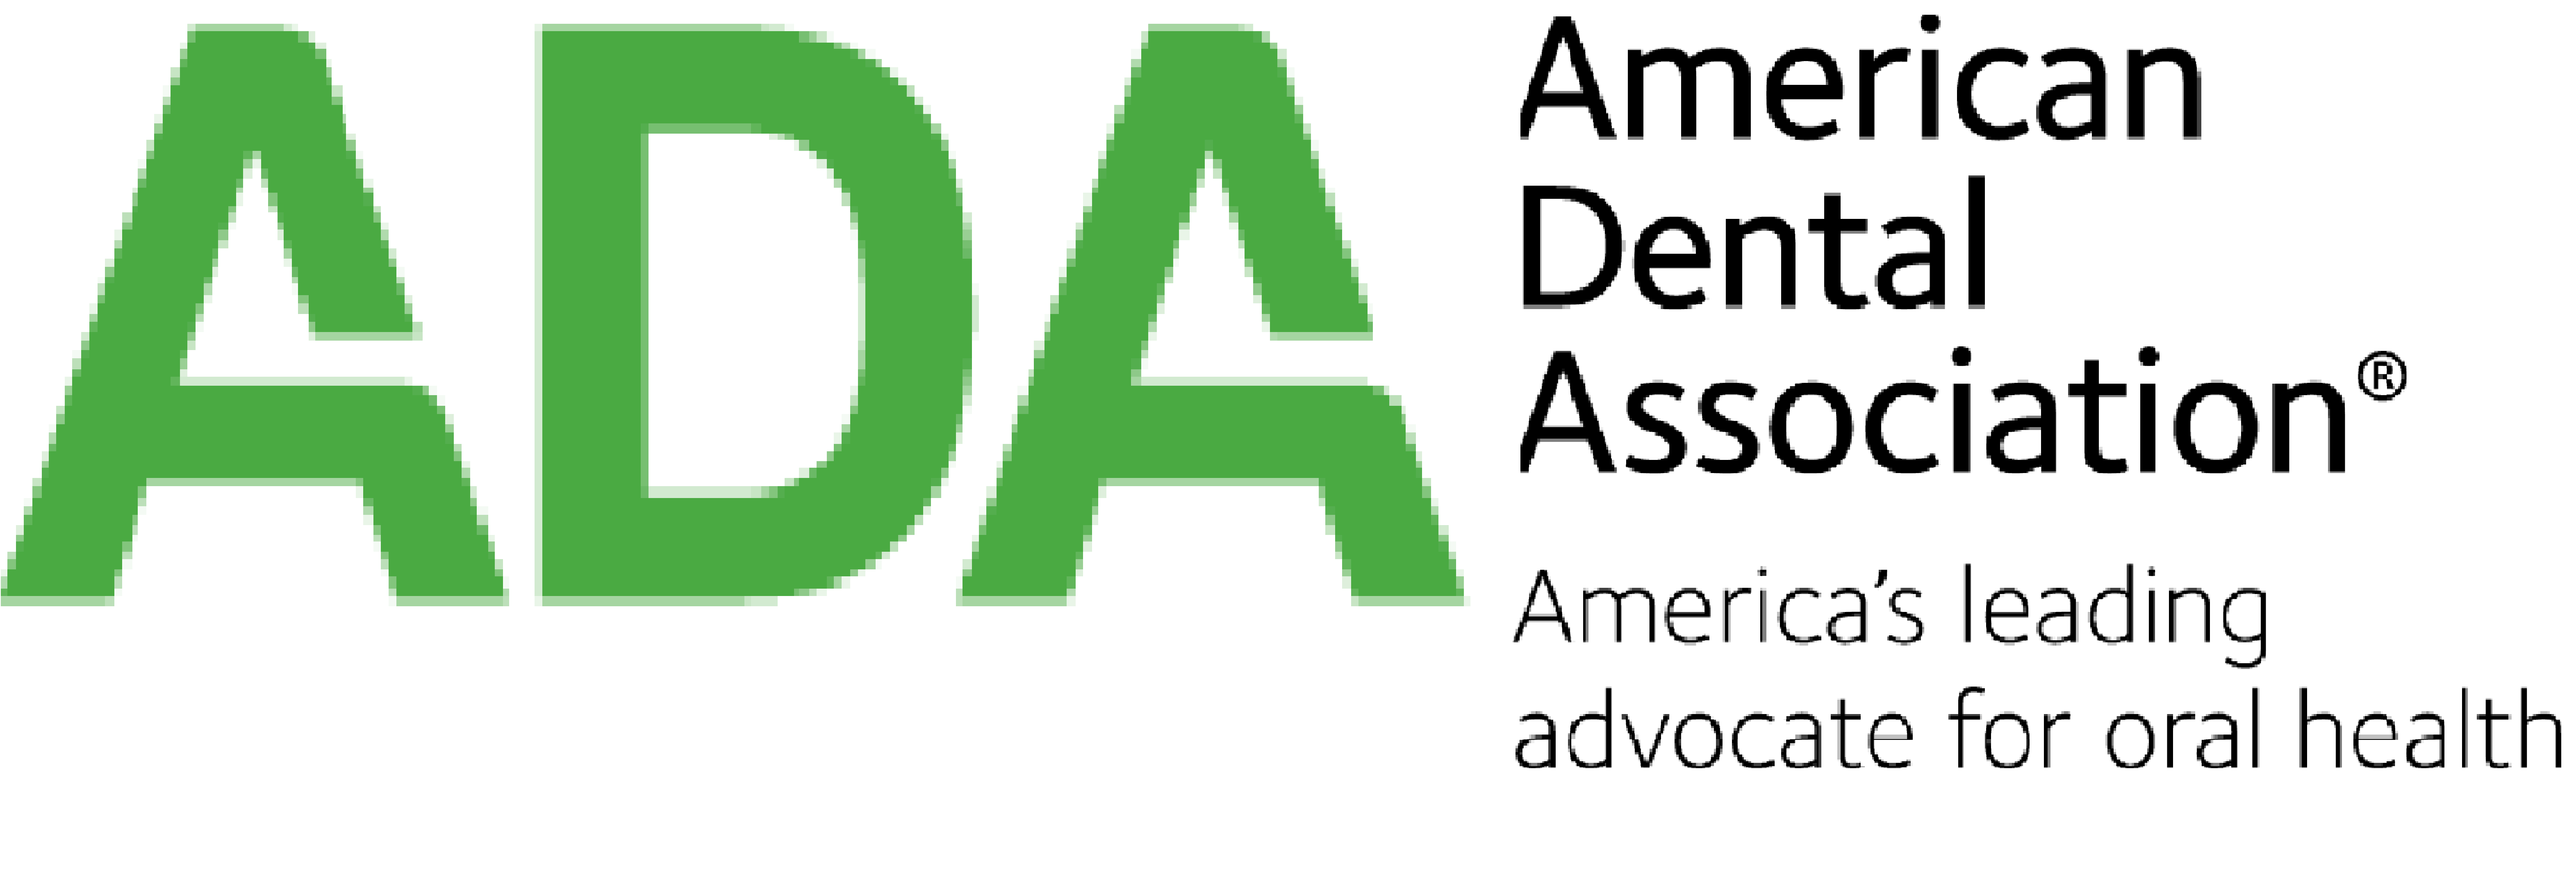 Visit the ADA website